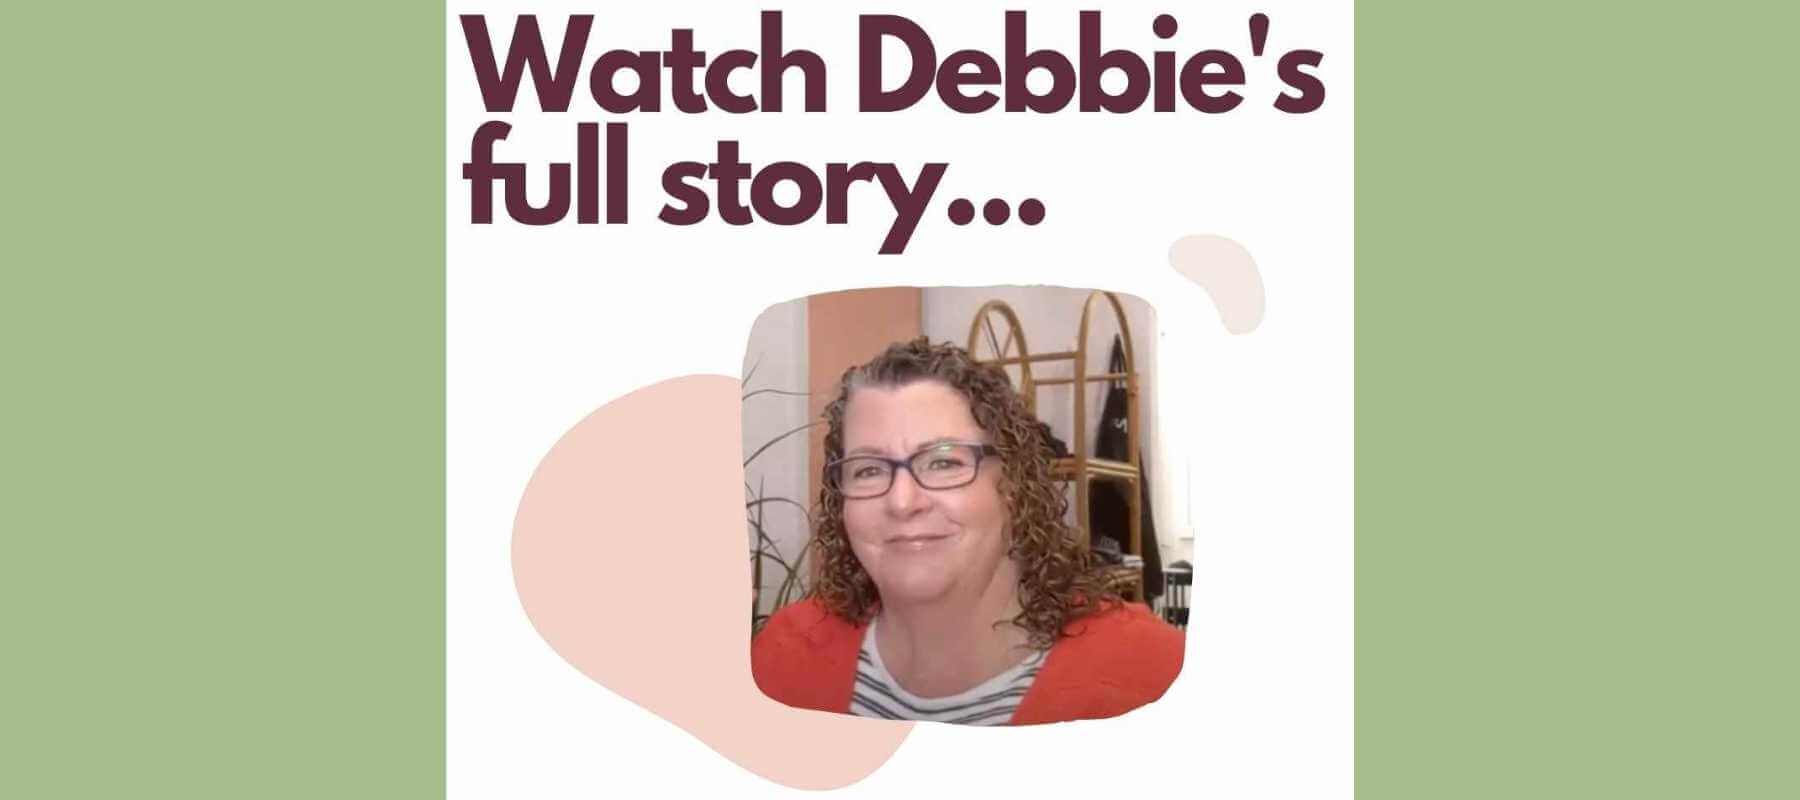 Debbies curly hair journey